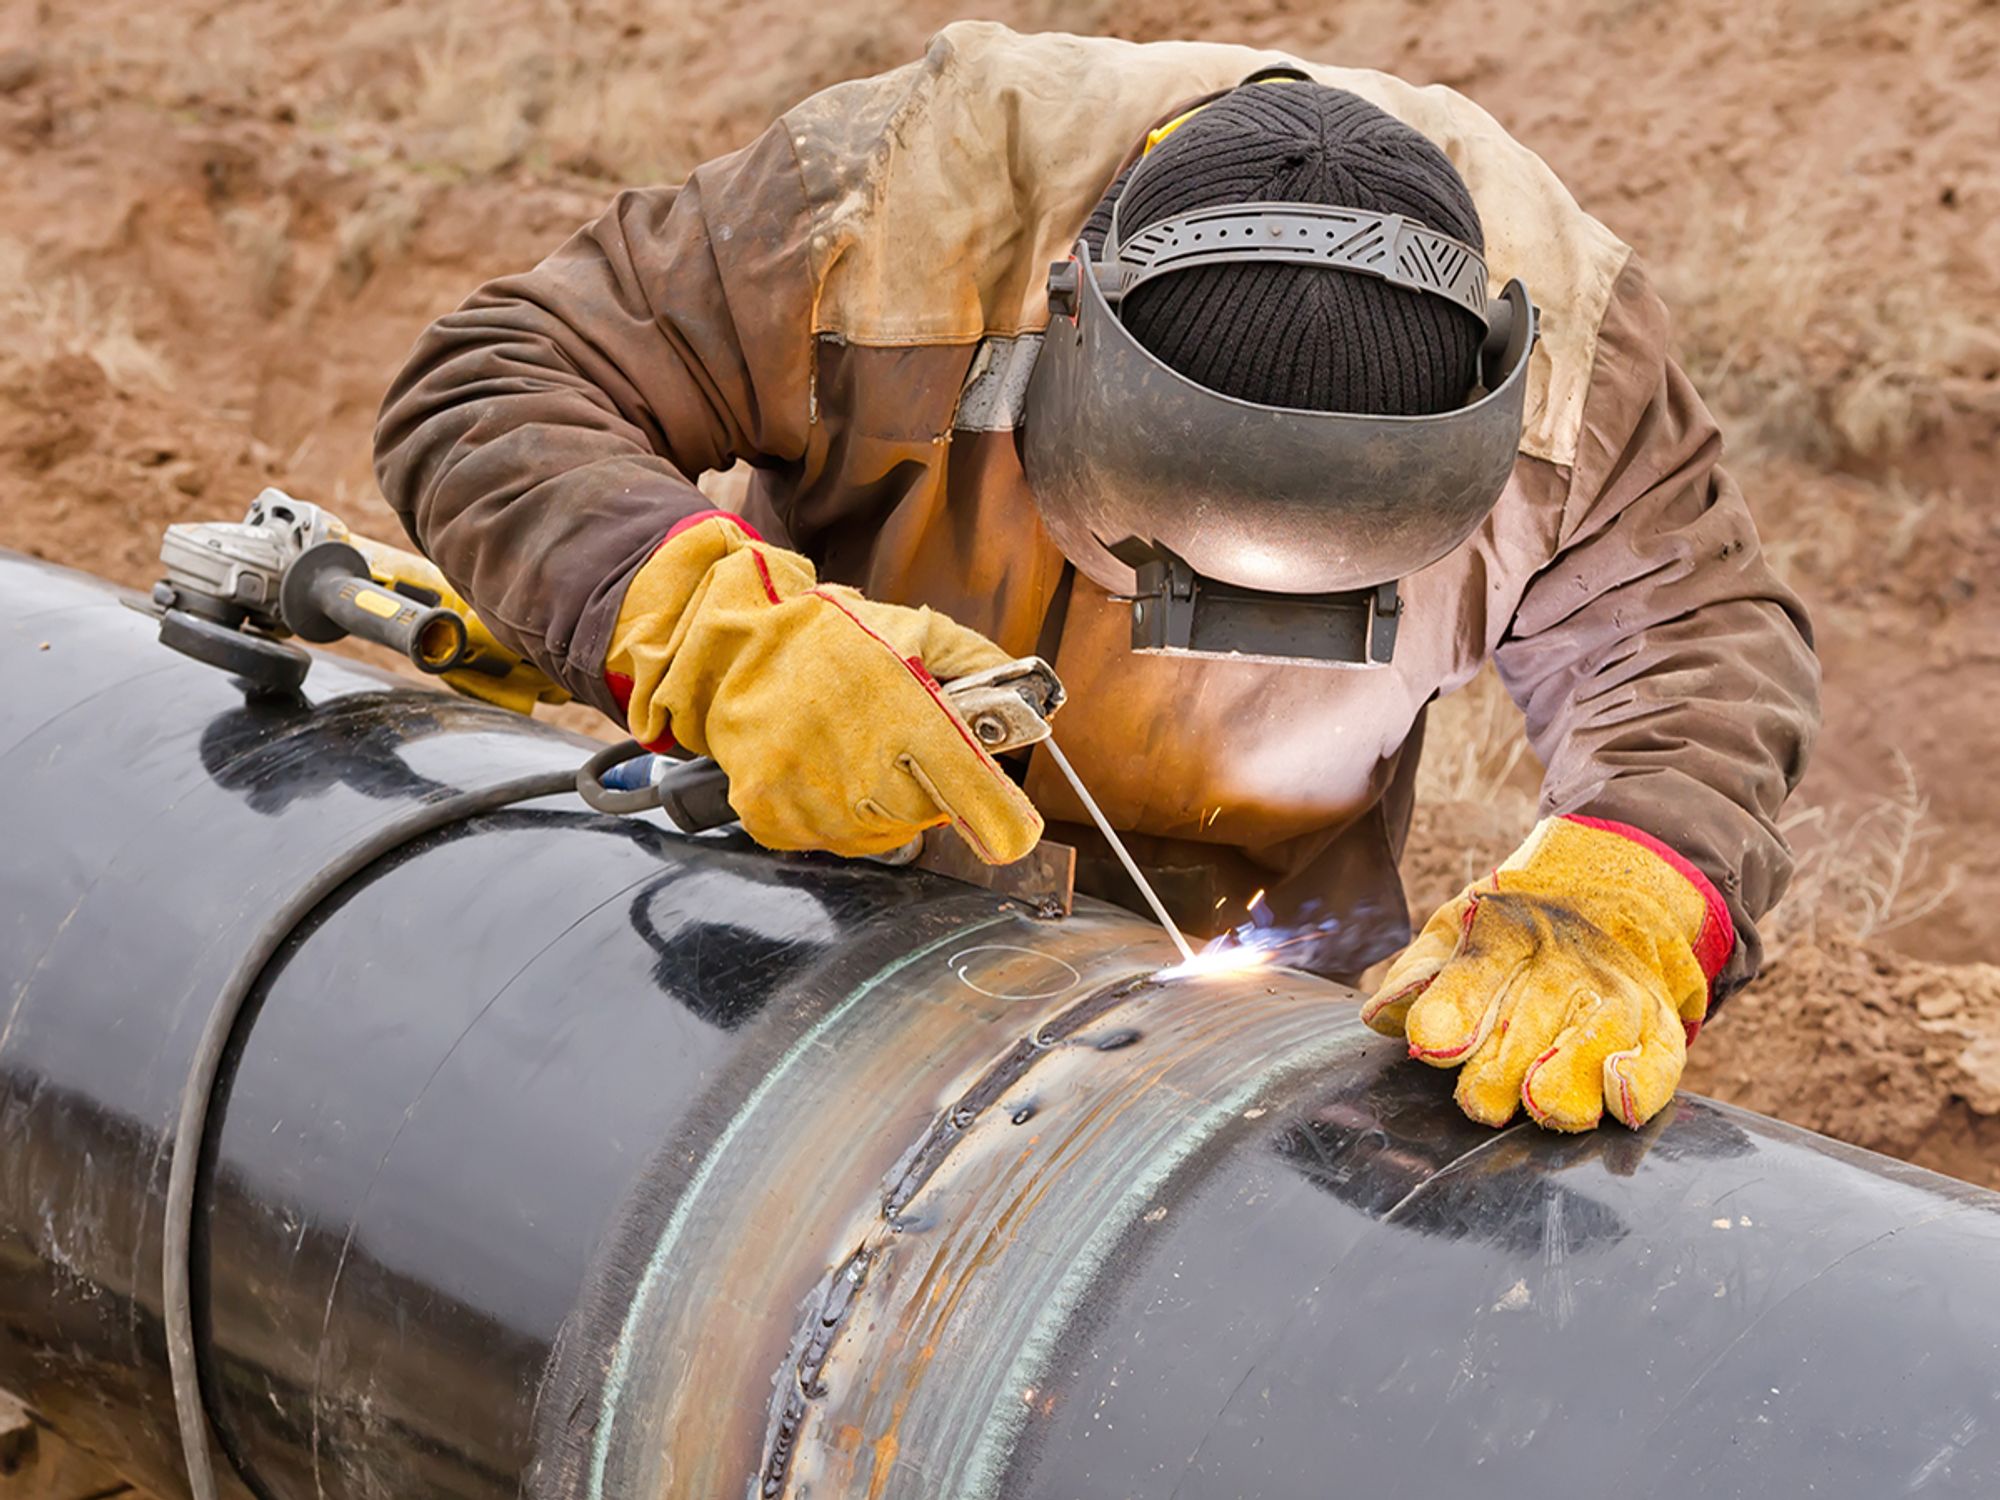 Pipeline welding trucks HOS exemption